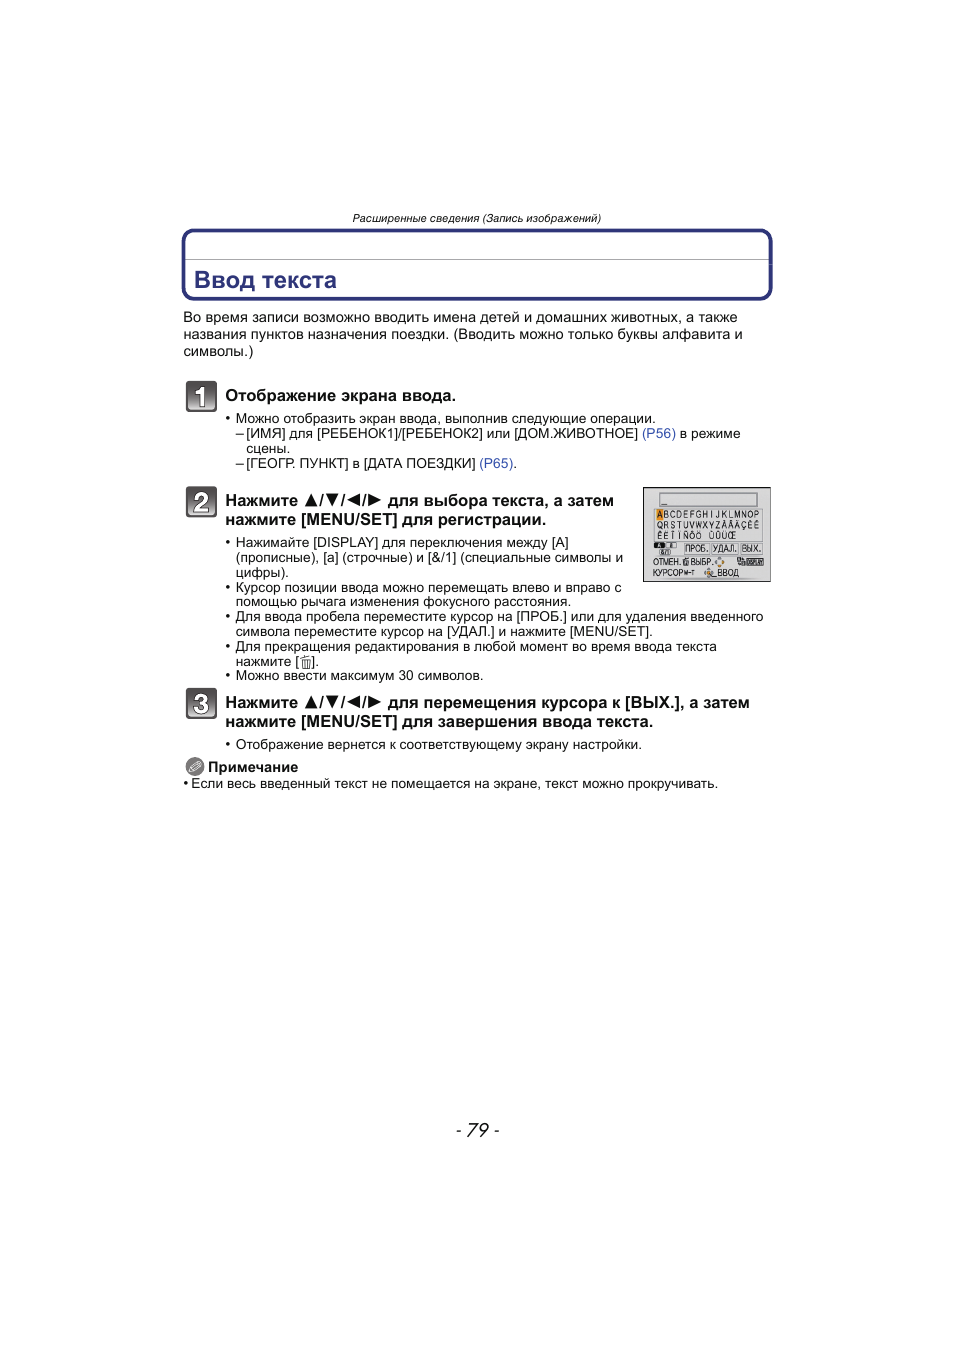 Ввод текста | Инструкция по эксплуатации Panasonic KX-MC6020 | Страница 79 / 130